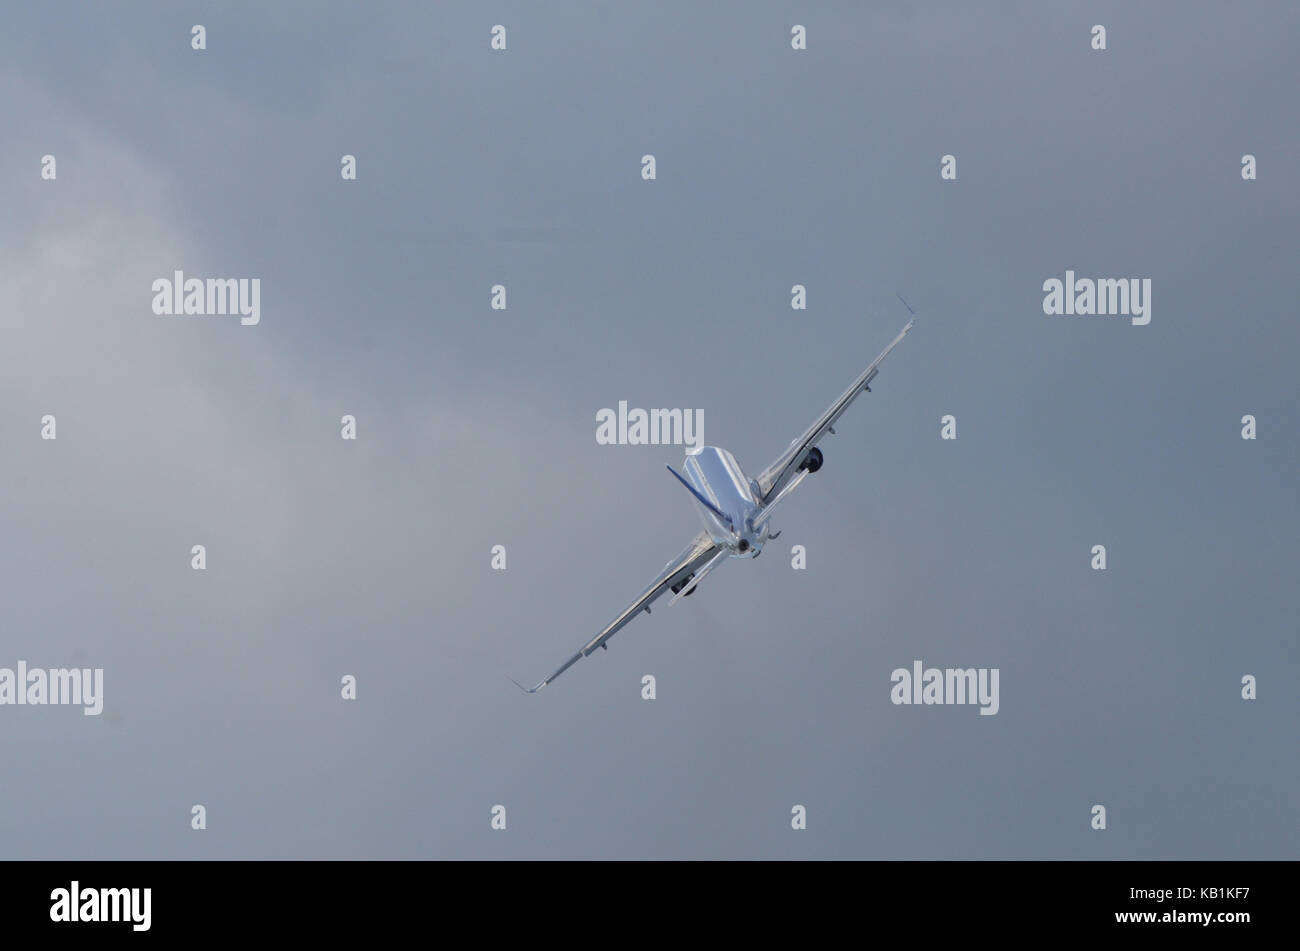 Deutschland, Berlin, ILA 2012, Air Display, Liner, Airbus A320, Stockfoto